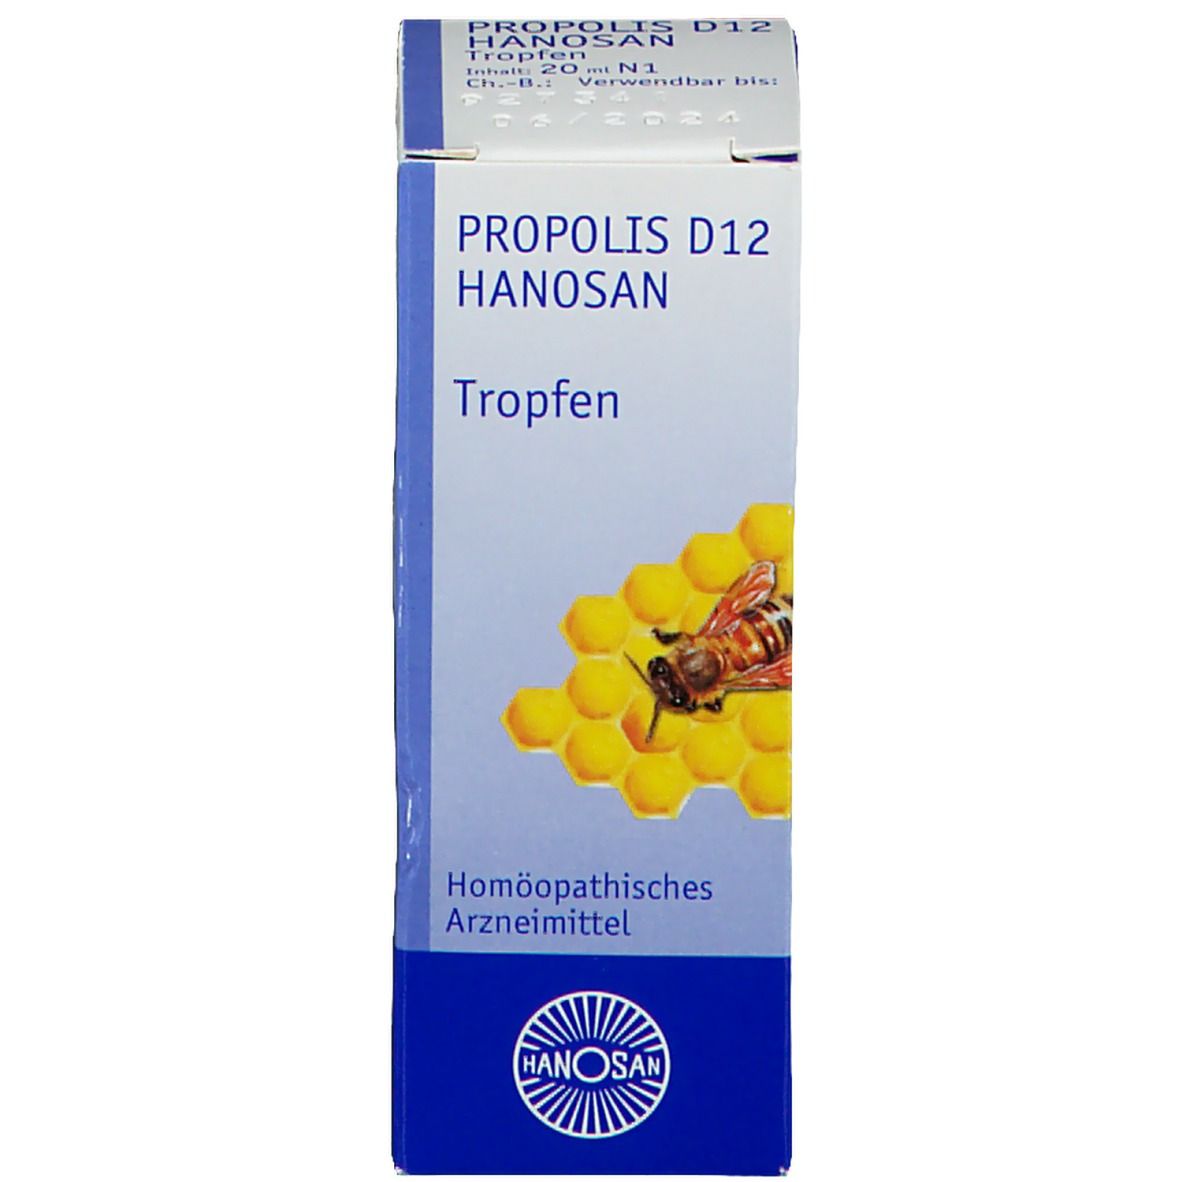 PROPOLIS D12